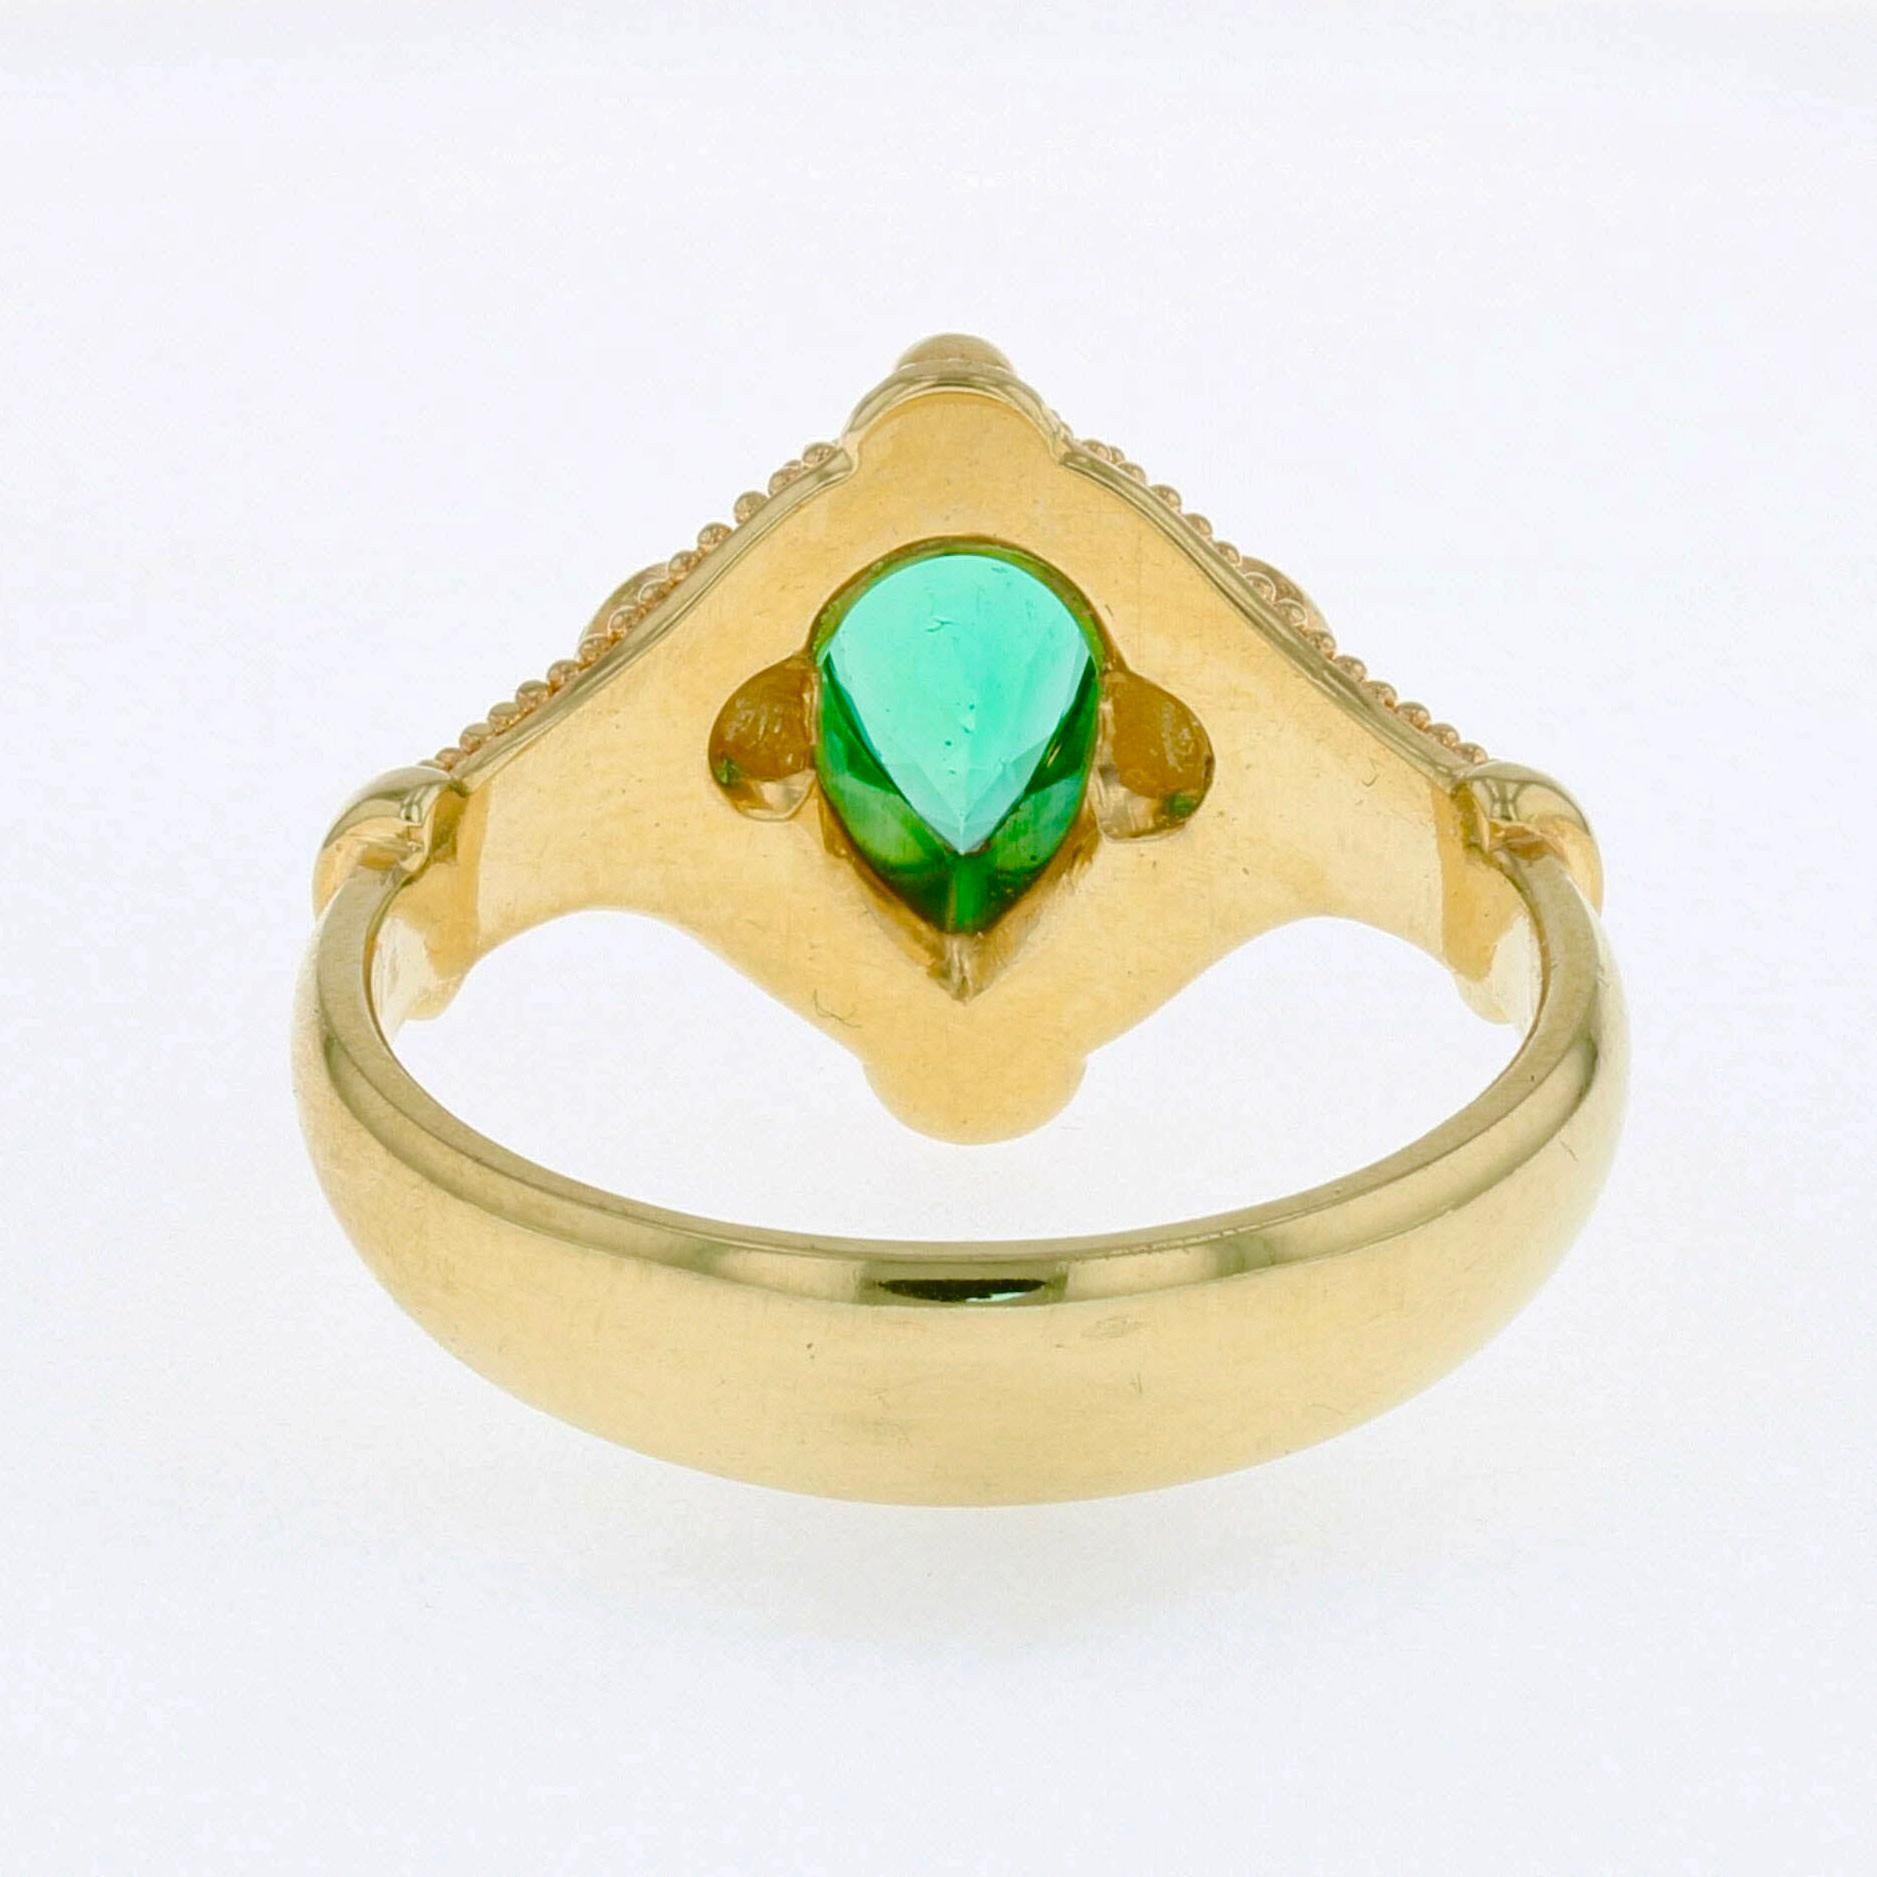 Contemporary Kent Raible 18 Karat Gold Emerald and Diamond Three-Stone Ring with Granulation